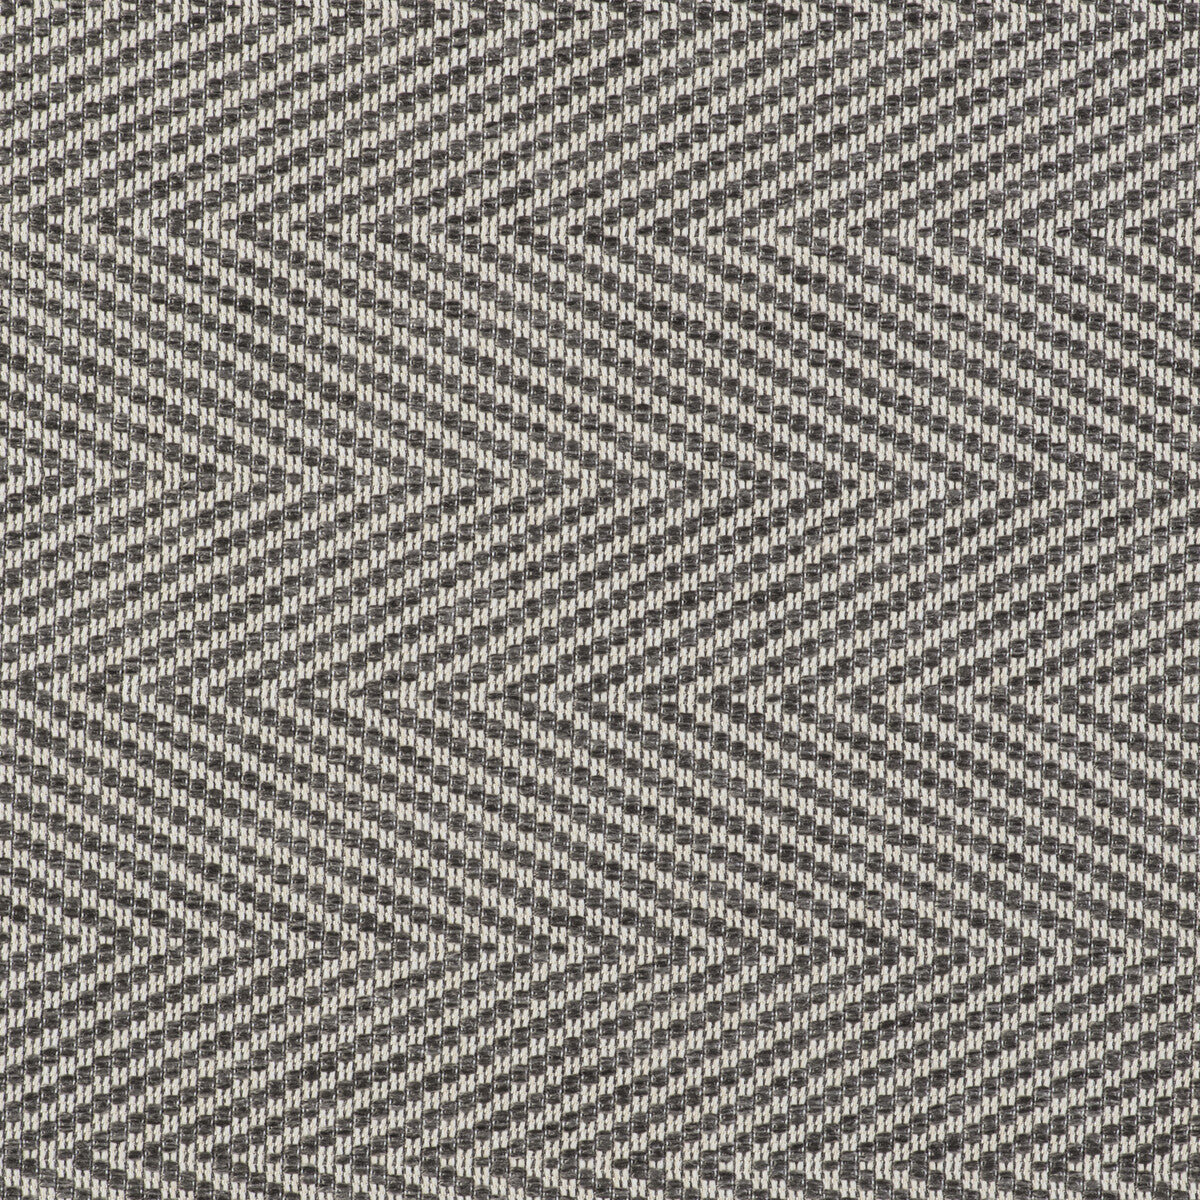 Gran Espiga fabric in gris color - pattern GDT5507.003.0 - by Gaston y Daniela in the Gaston Libreria collection